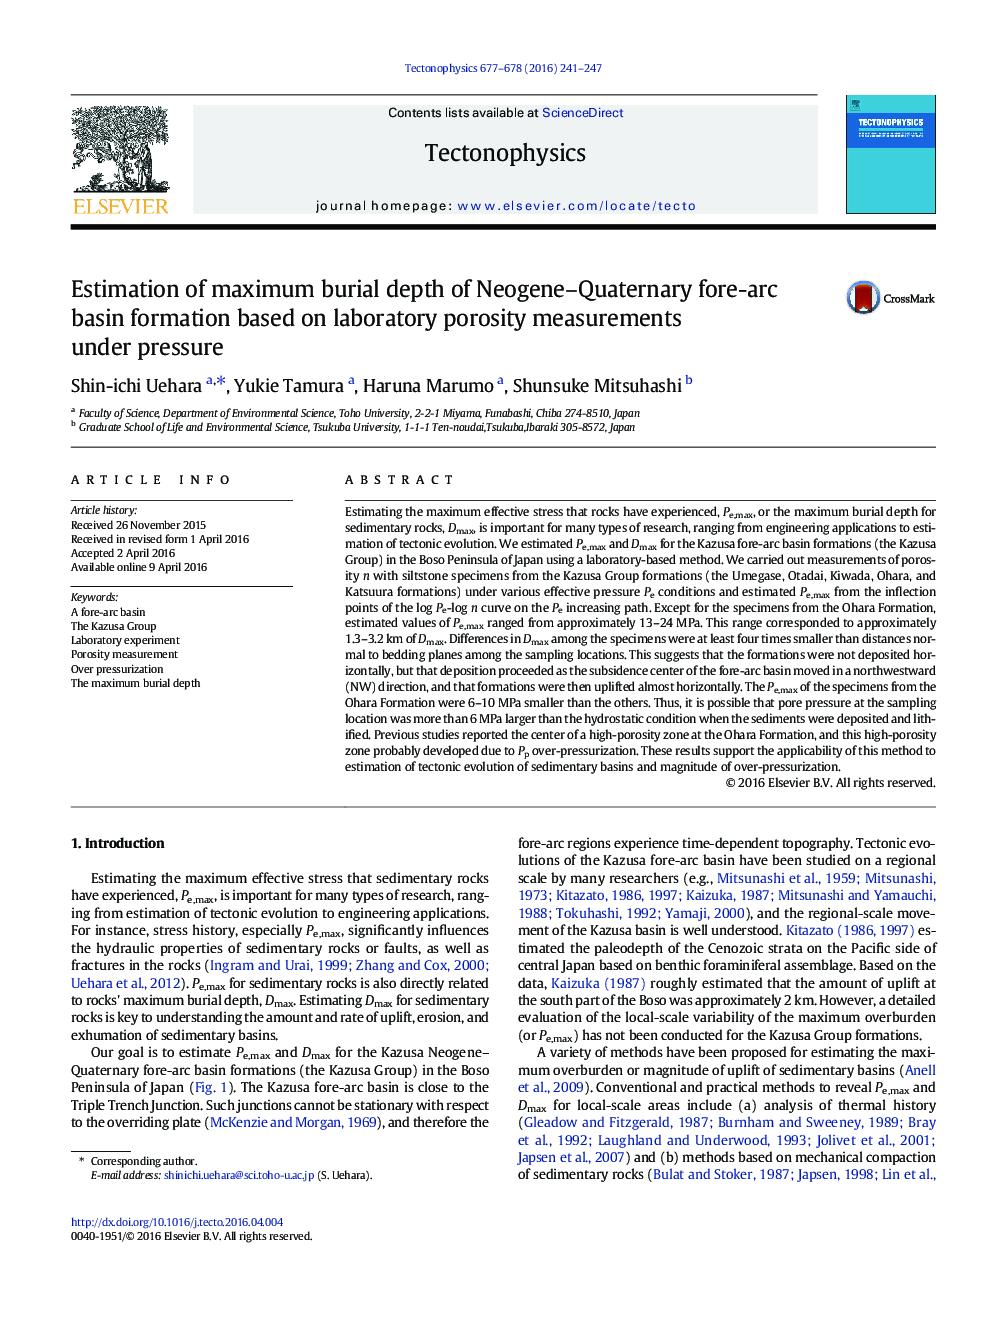 Estimation of maximum burial depth of Neogene–Quaternary fore-arc basin formation based on laboratory porosity measurements under pressure